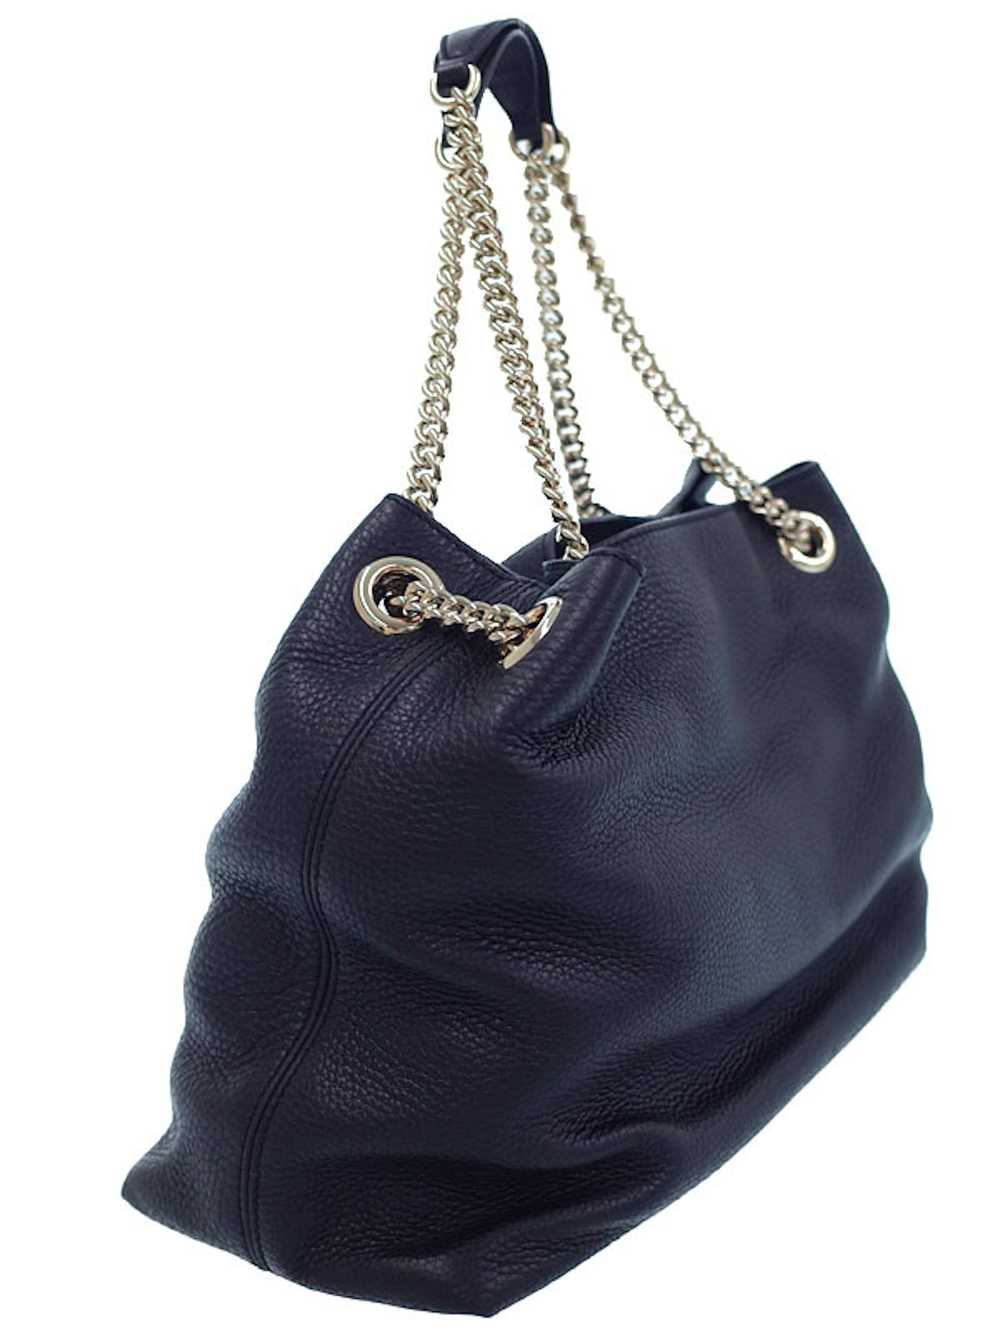 Gucci Gucci Leather Soho Chain Shoulder Bag Black - image 2